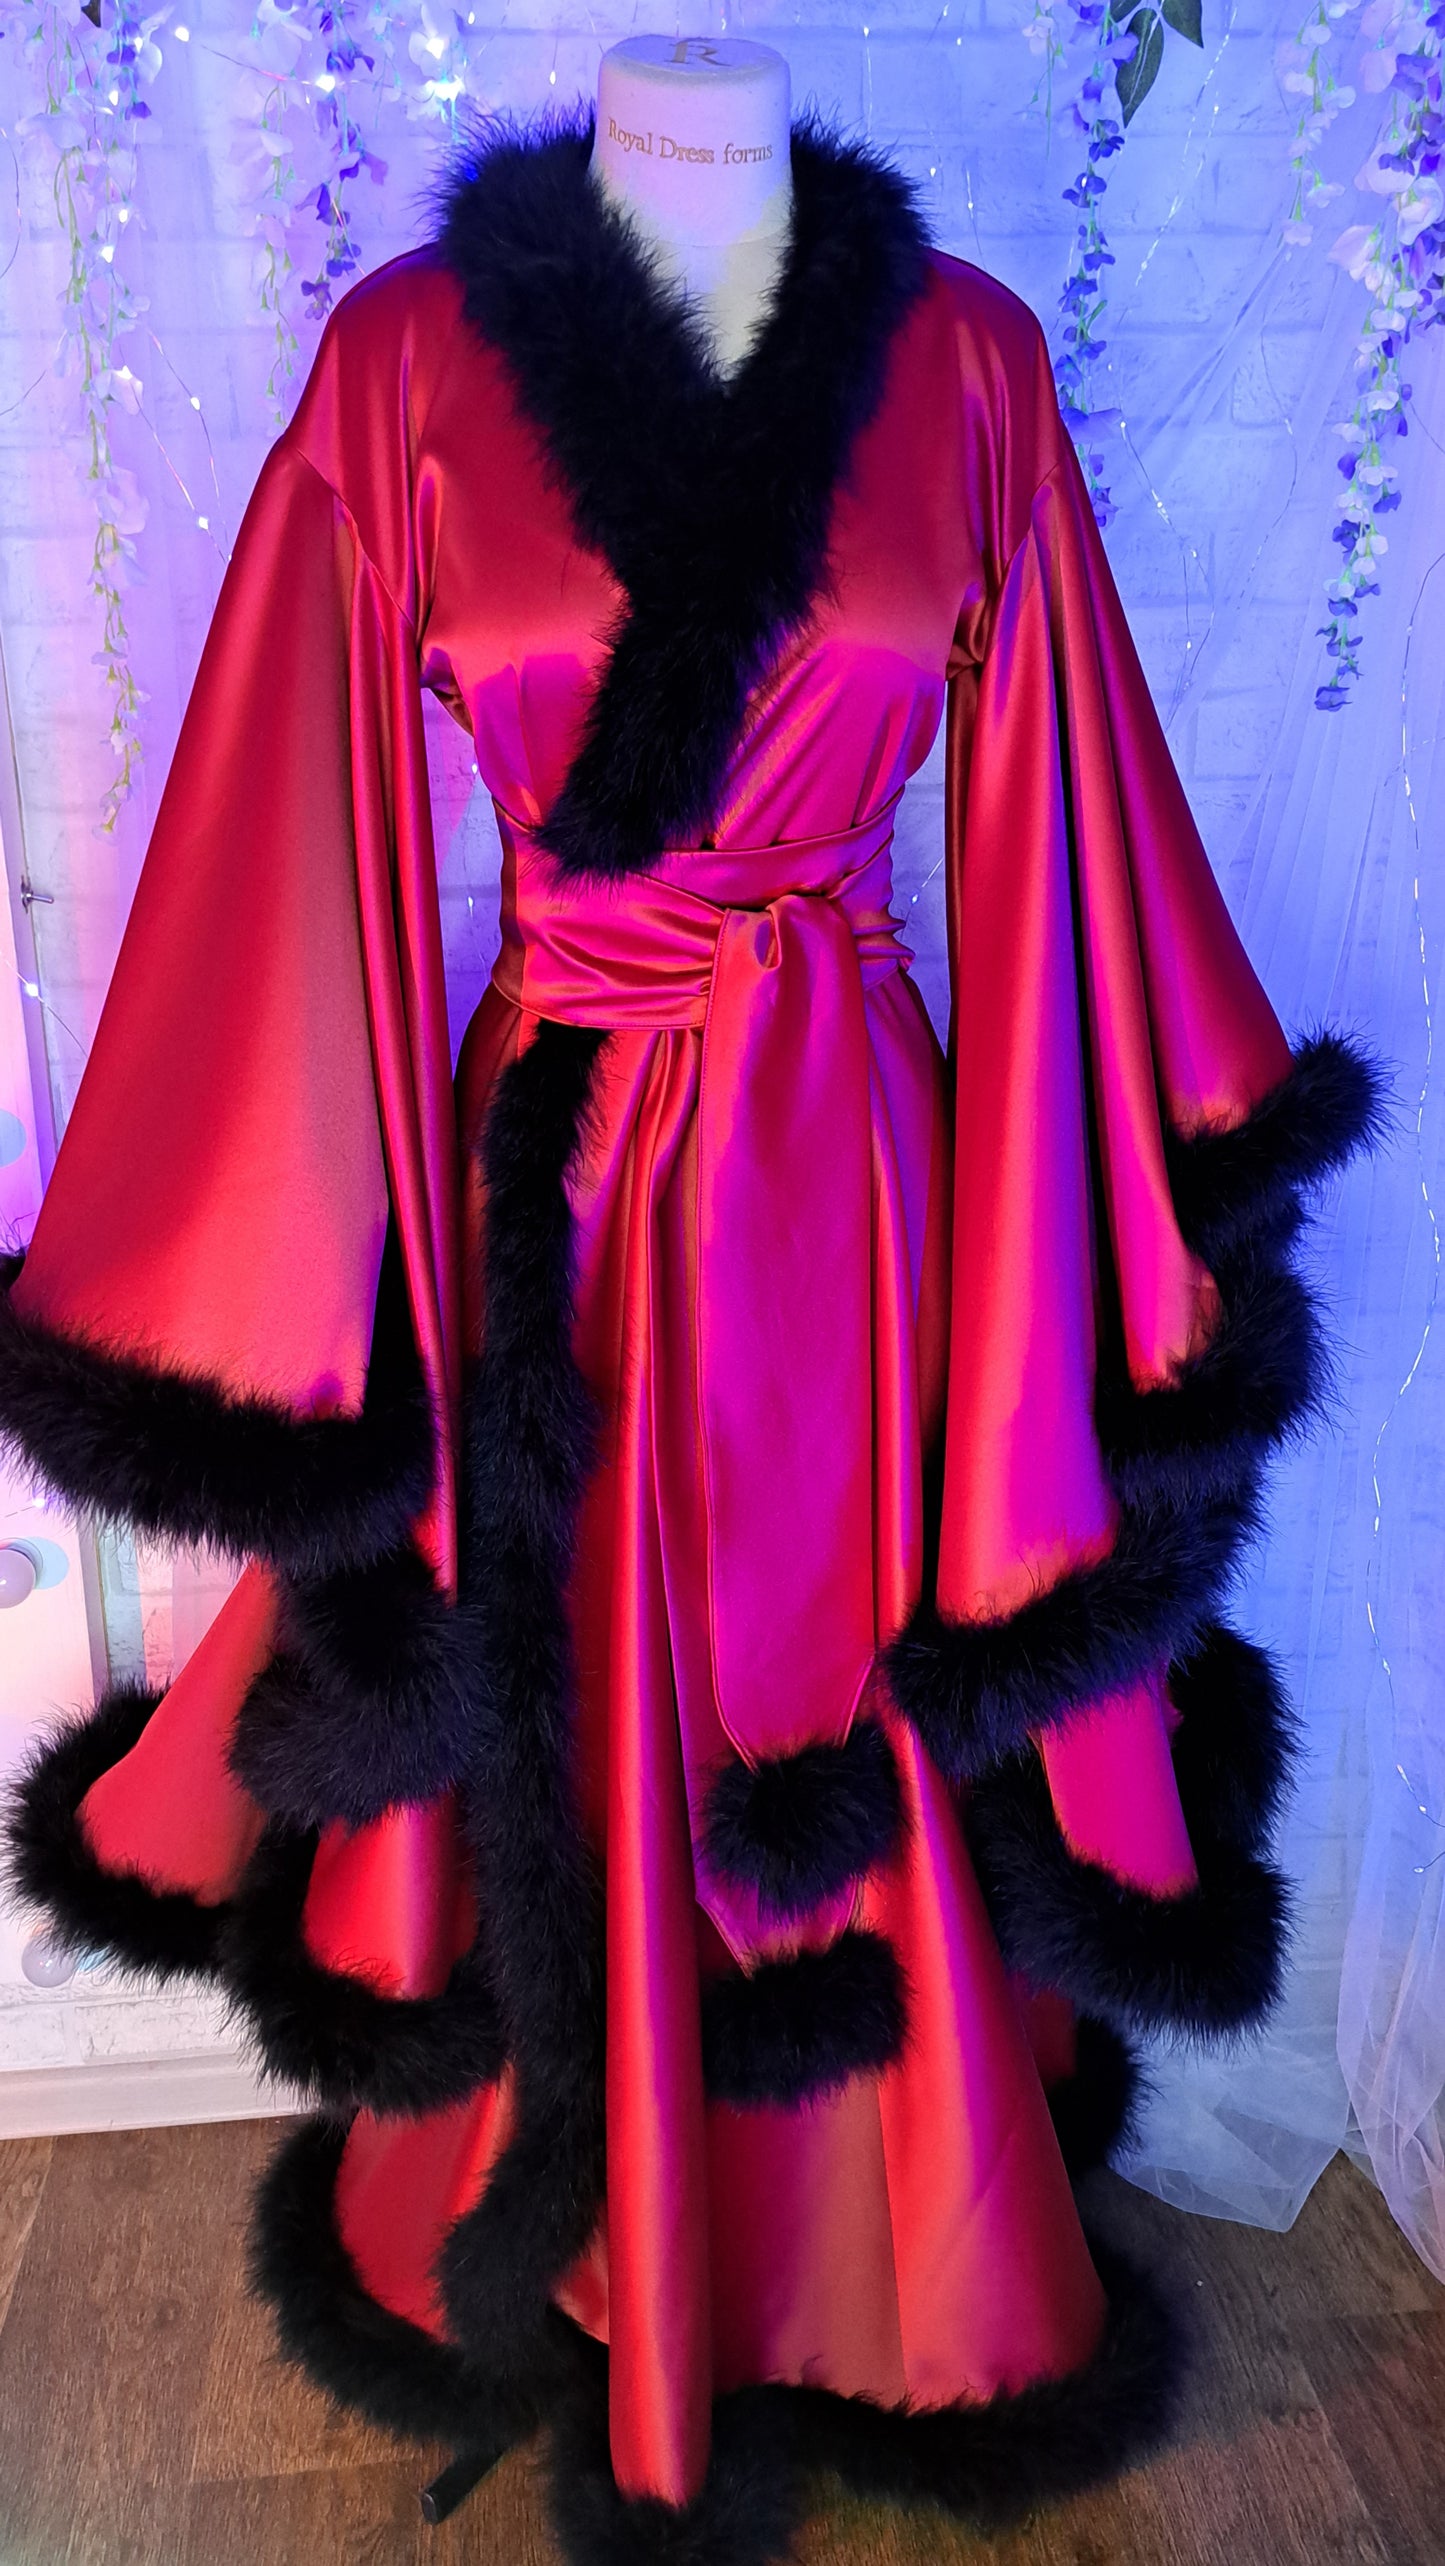 Rich widow robe in satin, pop culture edition